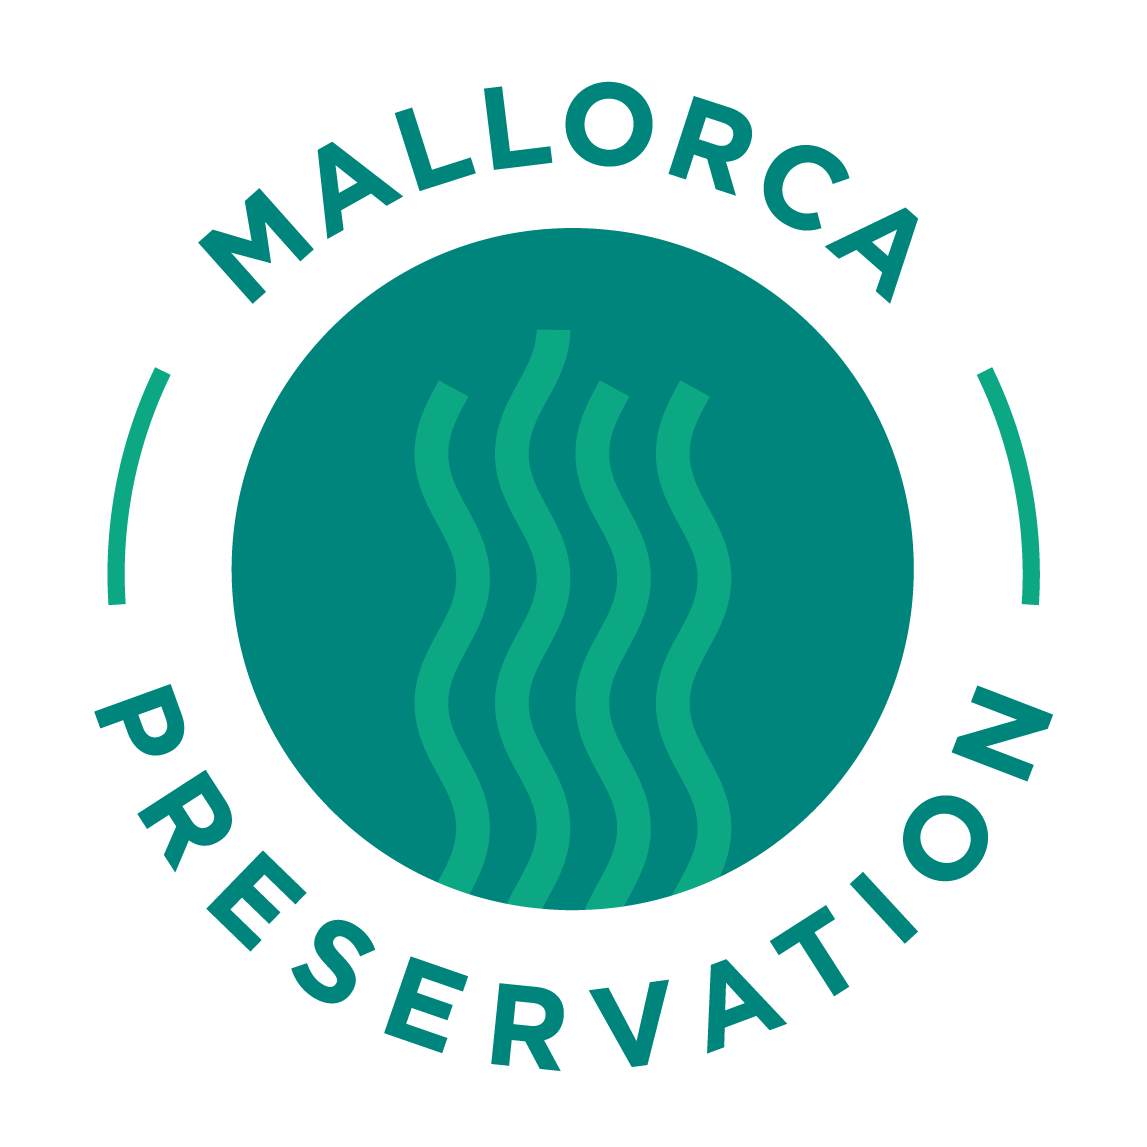 Mallorca Preservation Foundation